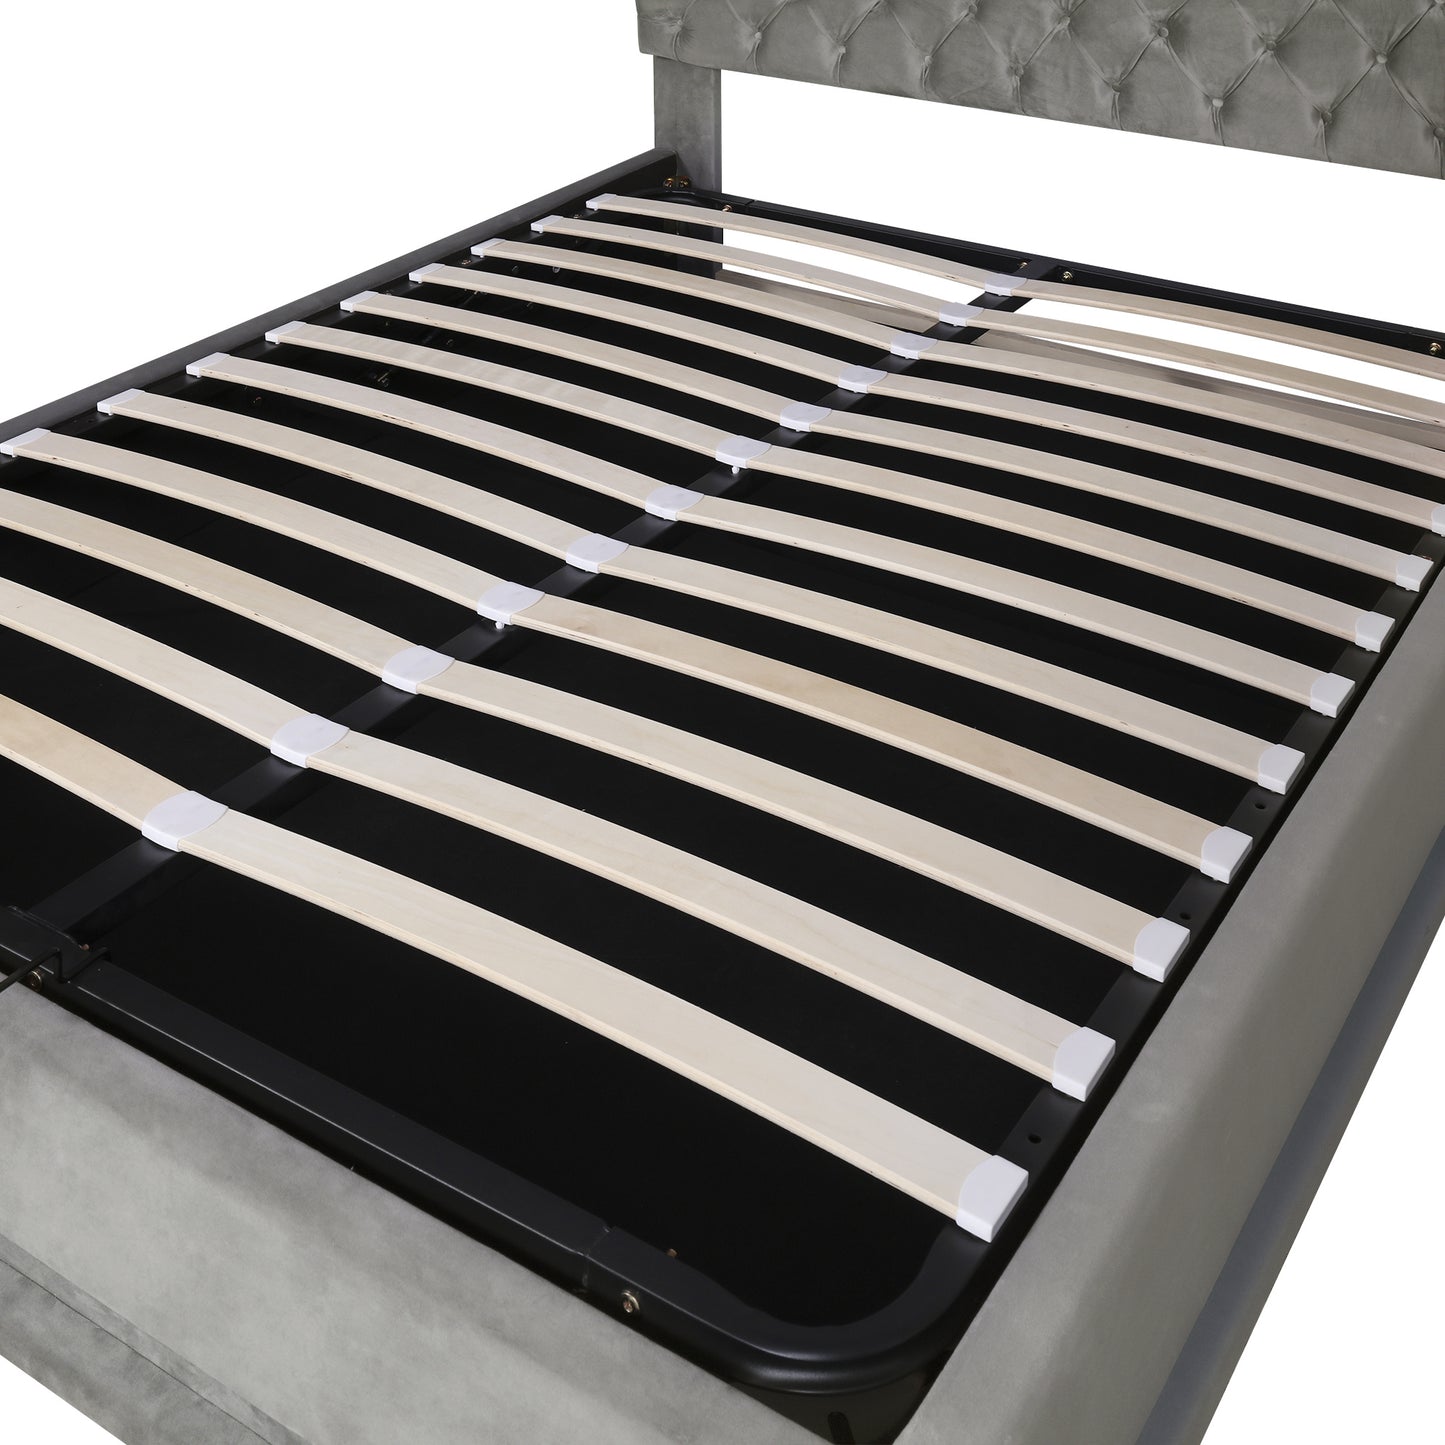 upholstered platform bed with adjustable tufted headboard and led light